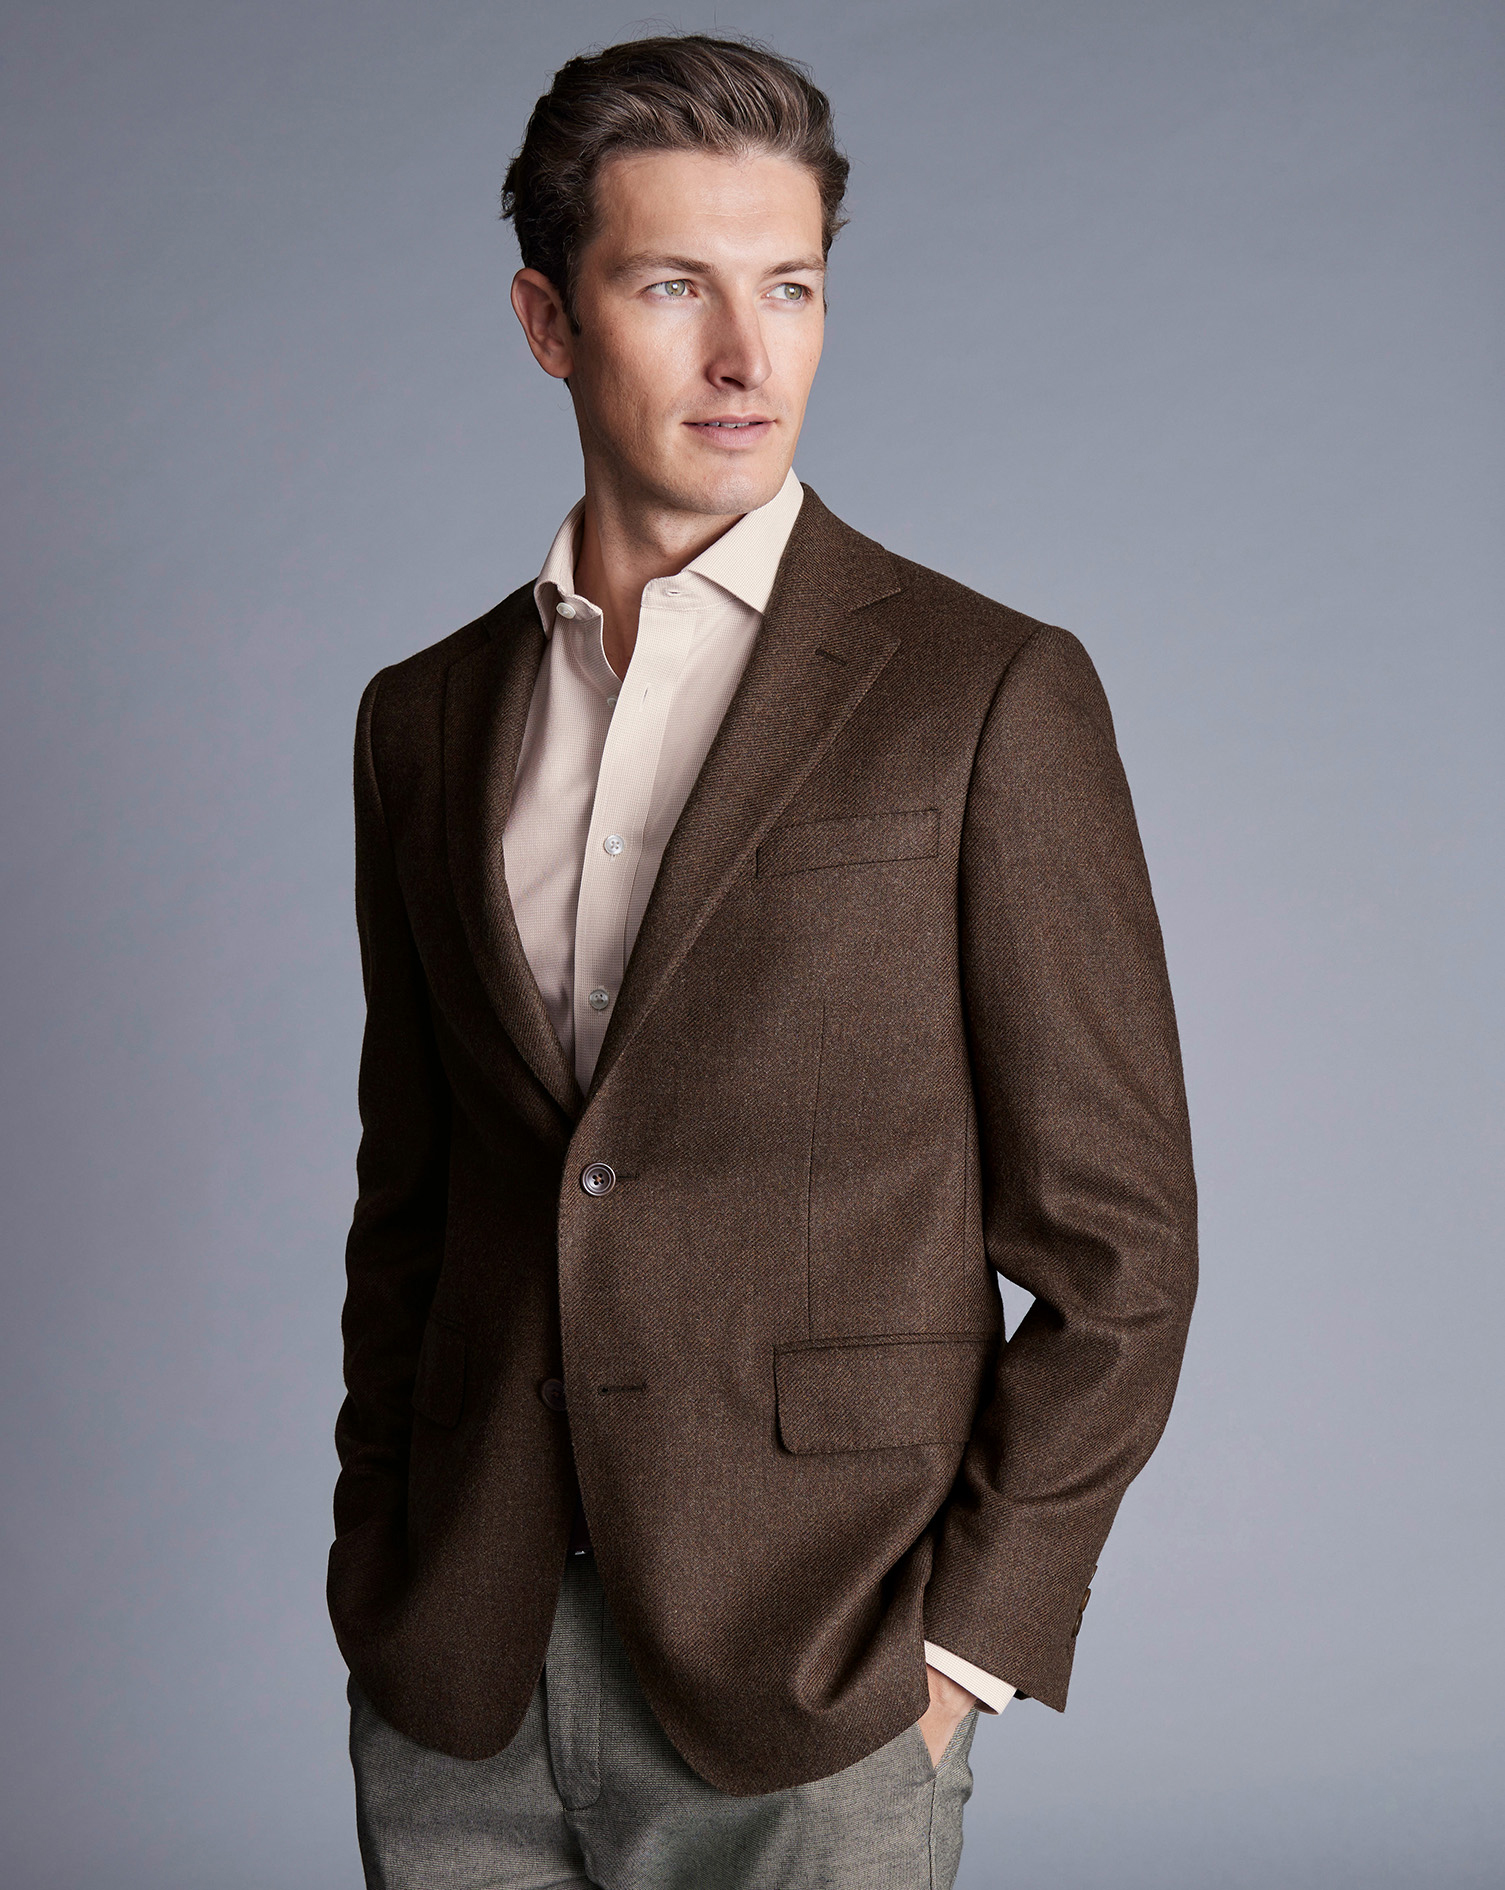 Men's Charles Tyrwhitt Luxury Italian Twill na Jacket - Toffee Brown Size 44R Wool
